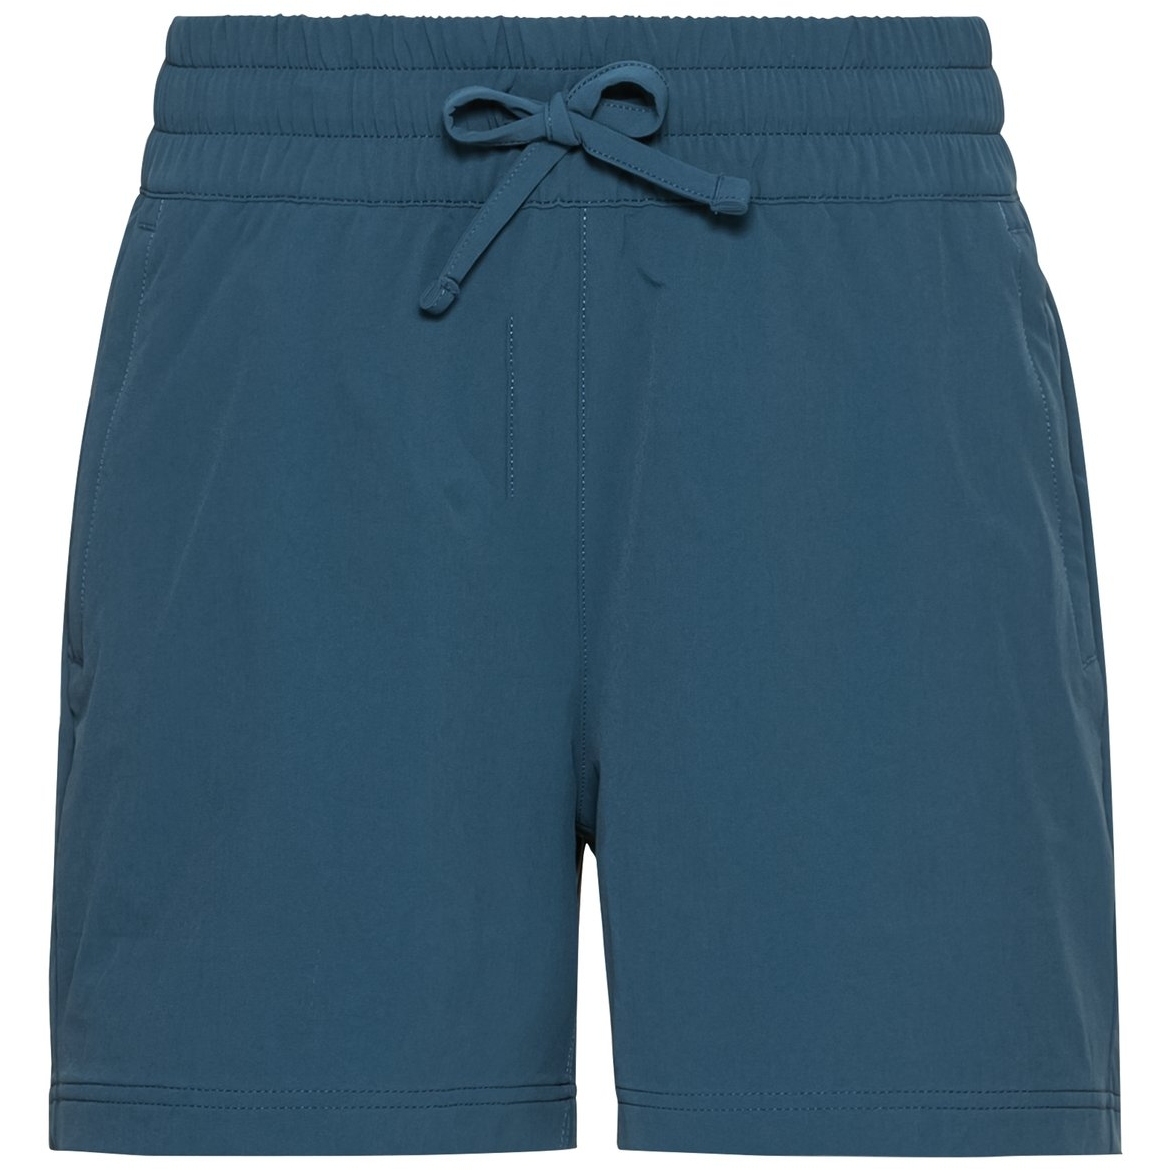 Produktbild von Odlo Damen Halden Shorts - blue wing teal